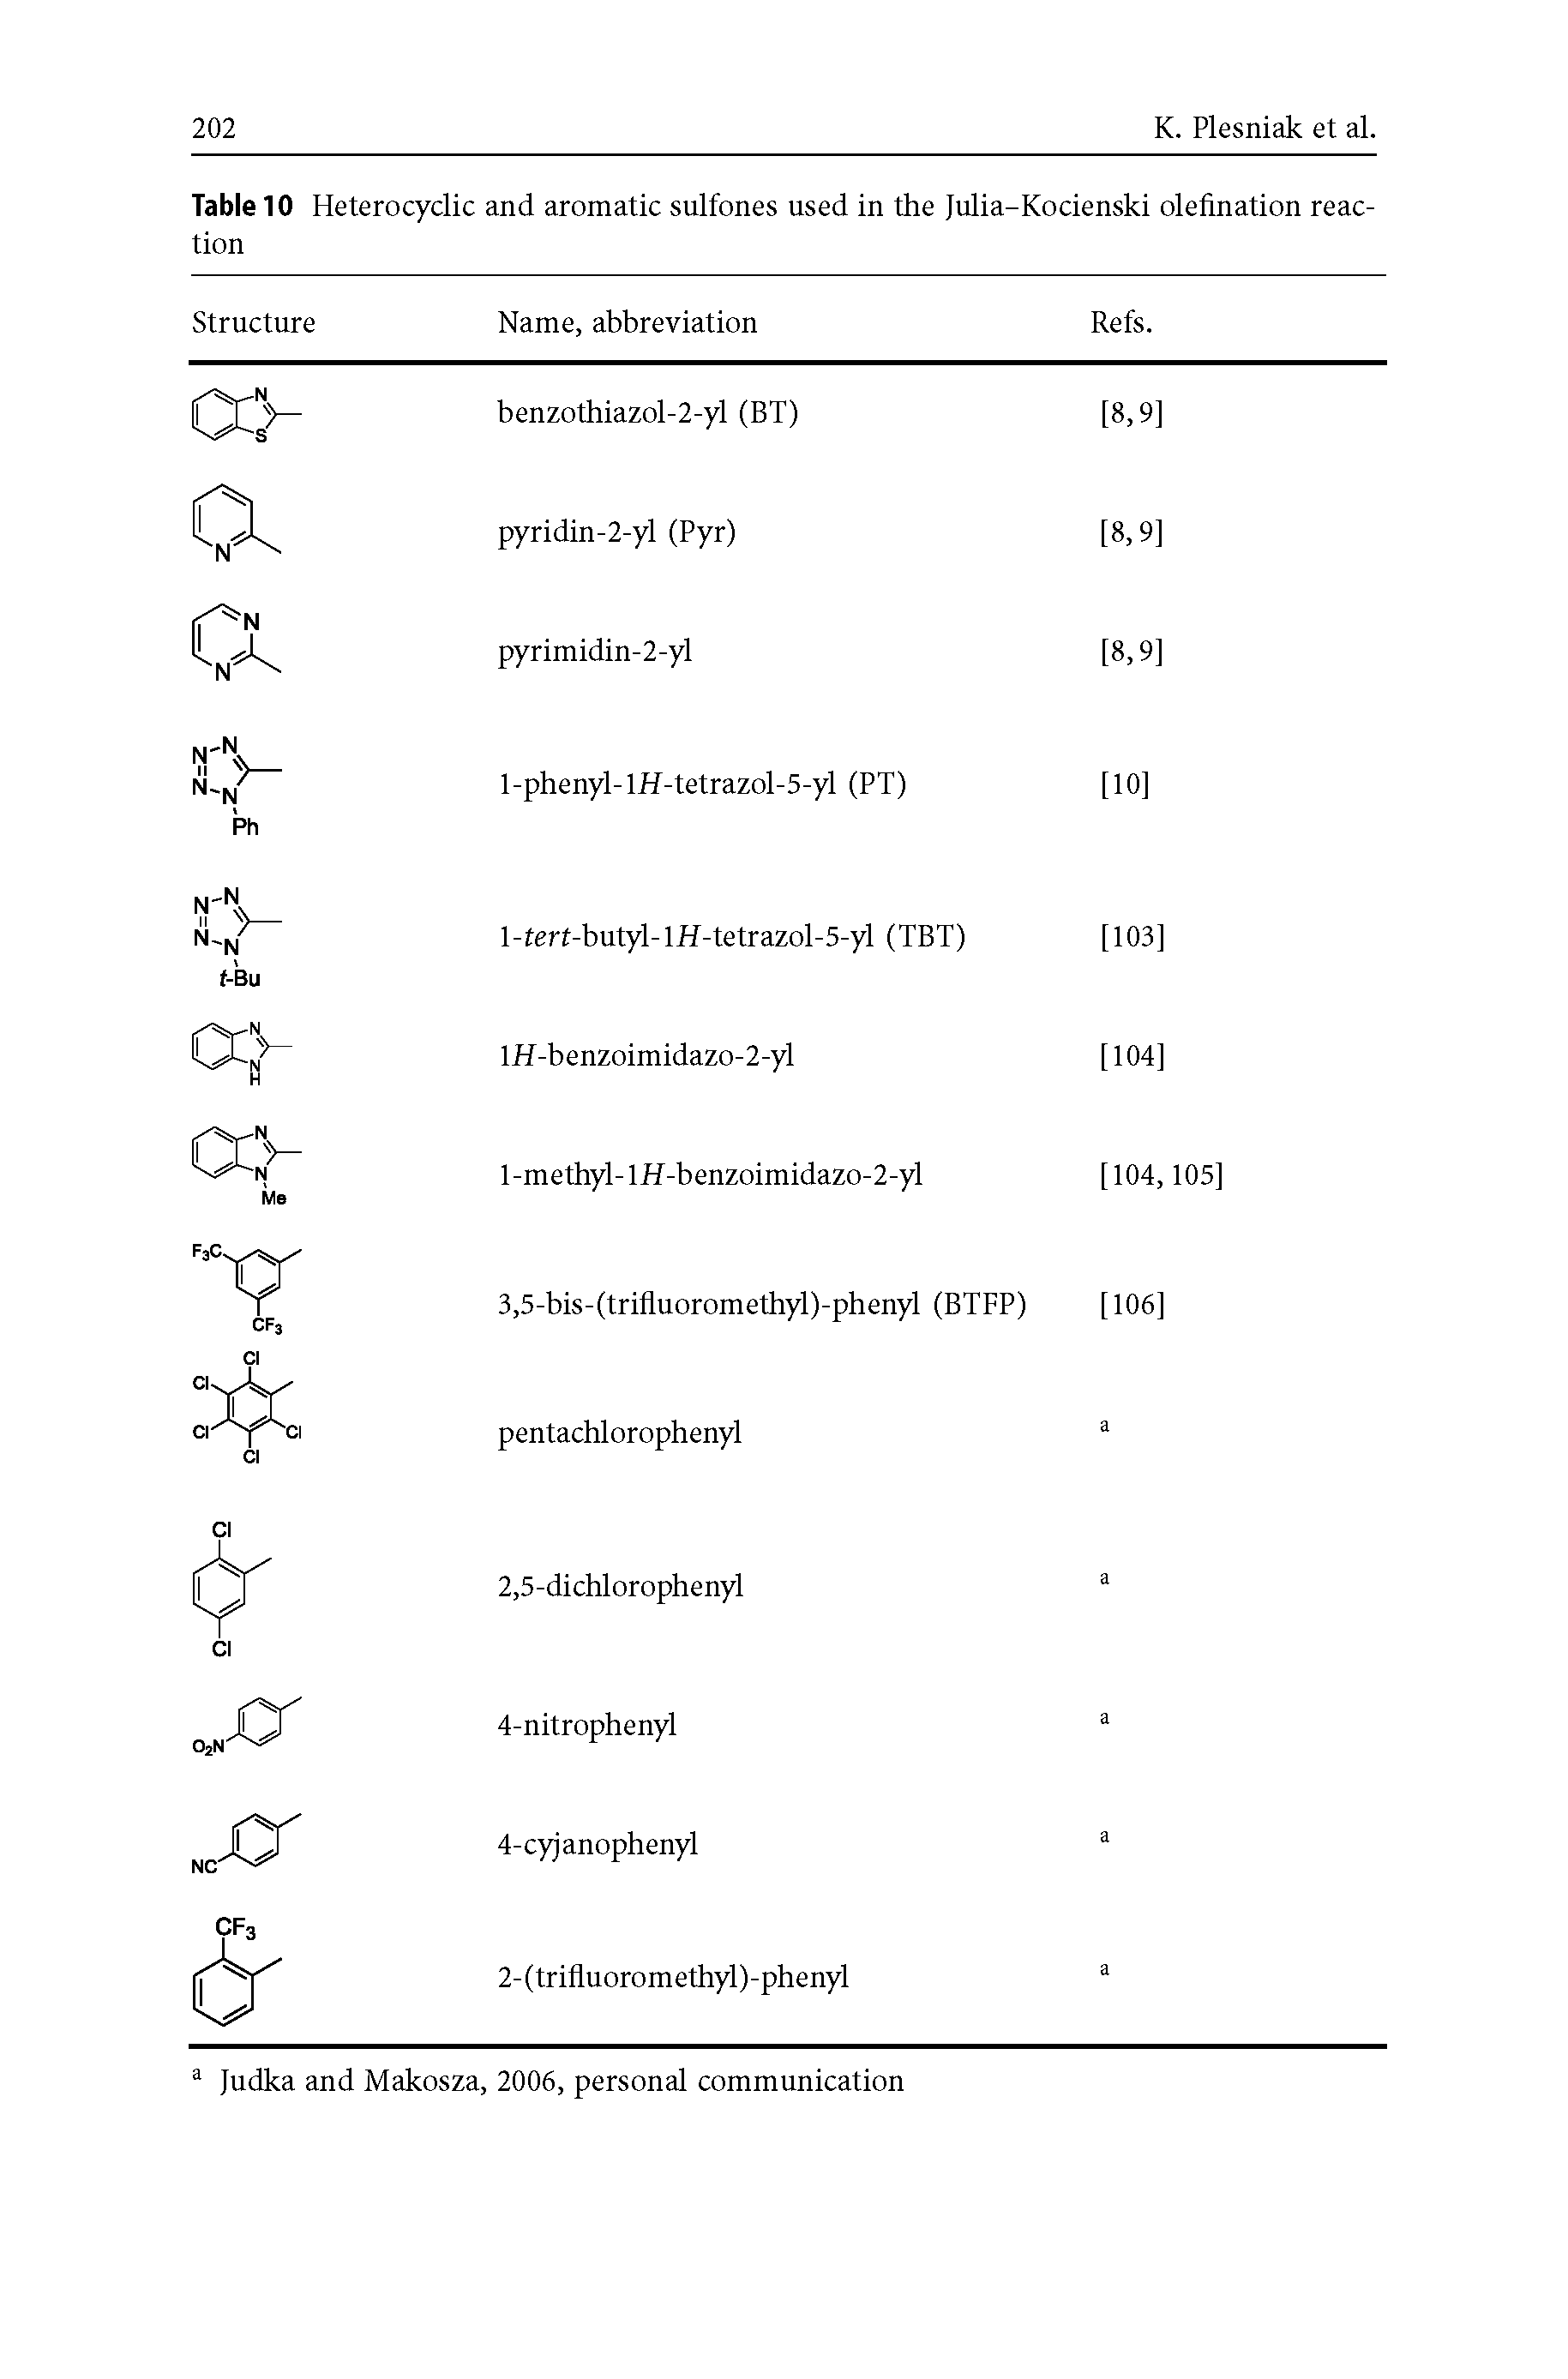 Table 10 Heterocyclic and aromatic sulfones used in the Julia-Kocienski olefination reaction ...